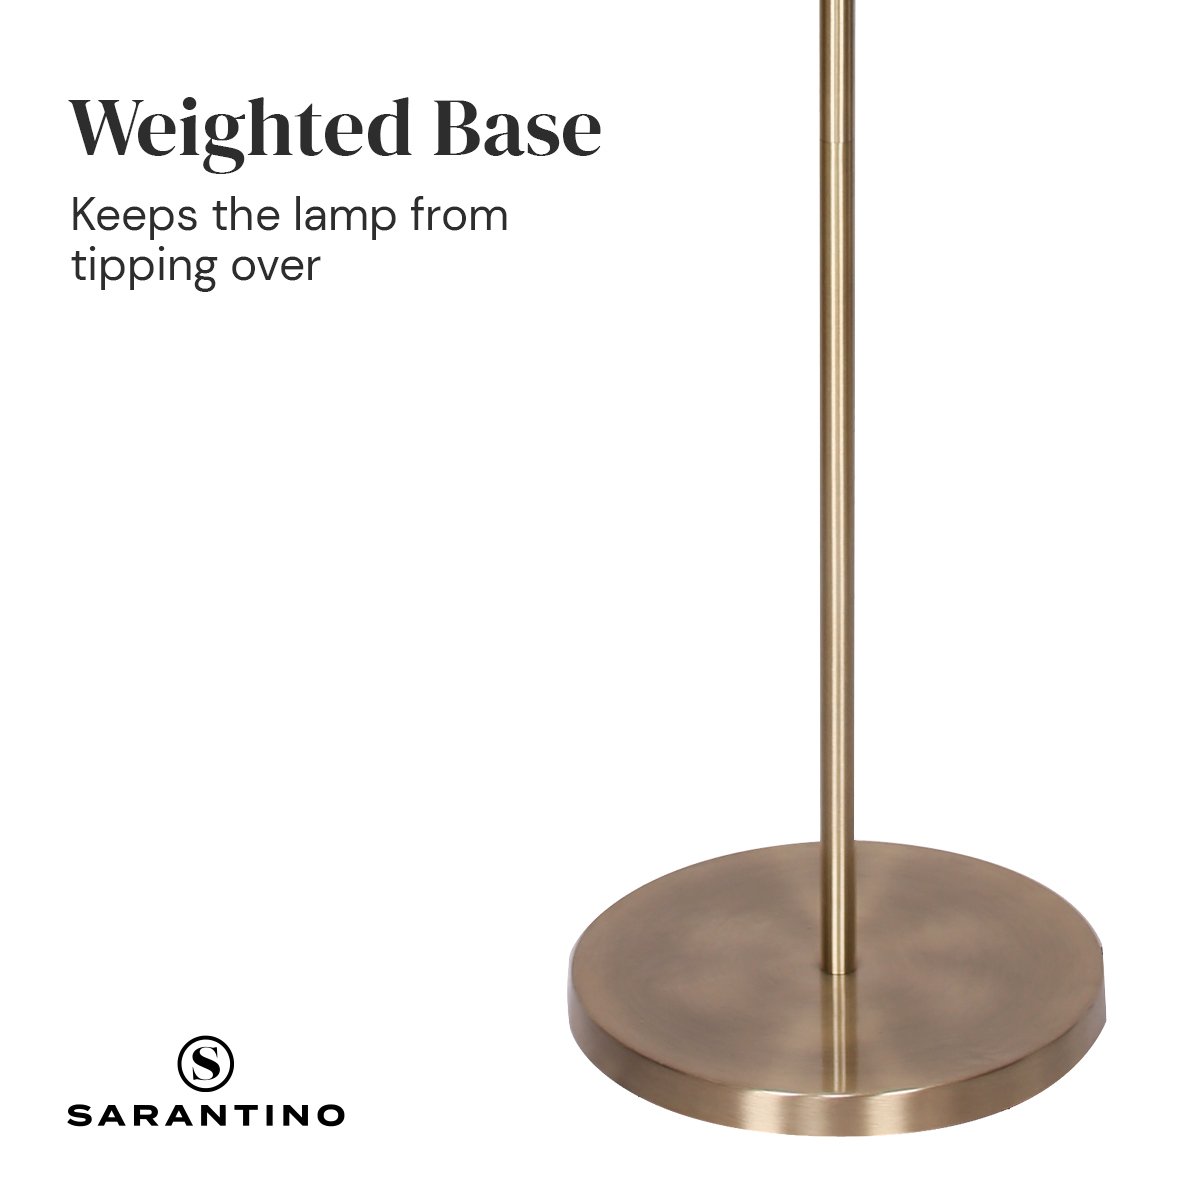 Sarantino Metal Floor Lamp - Antique Brass